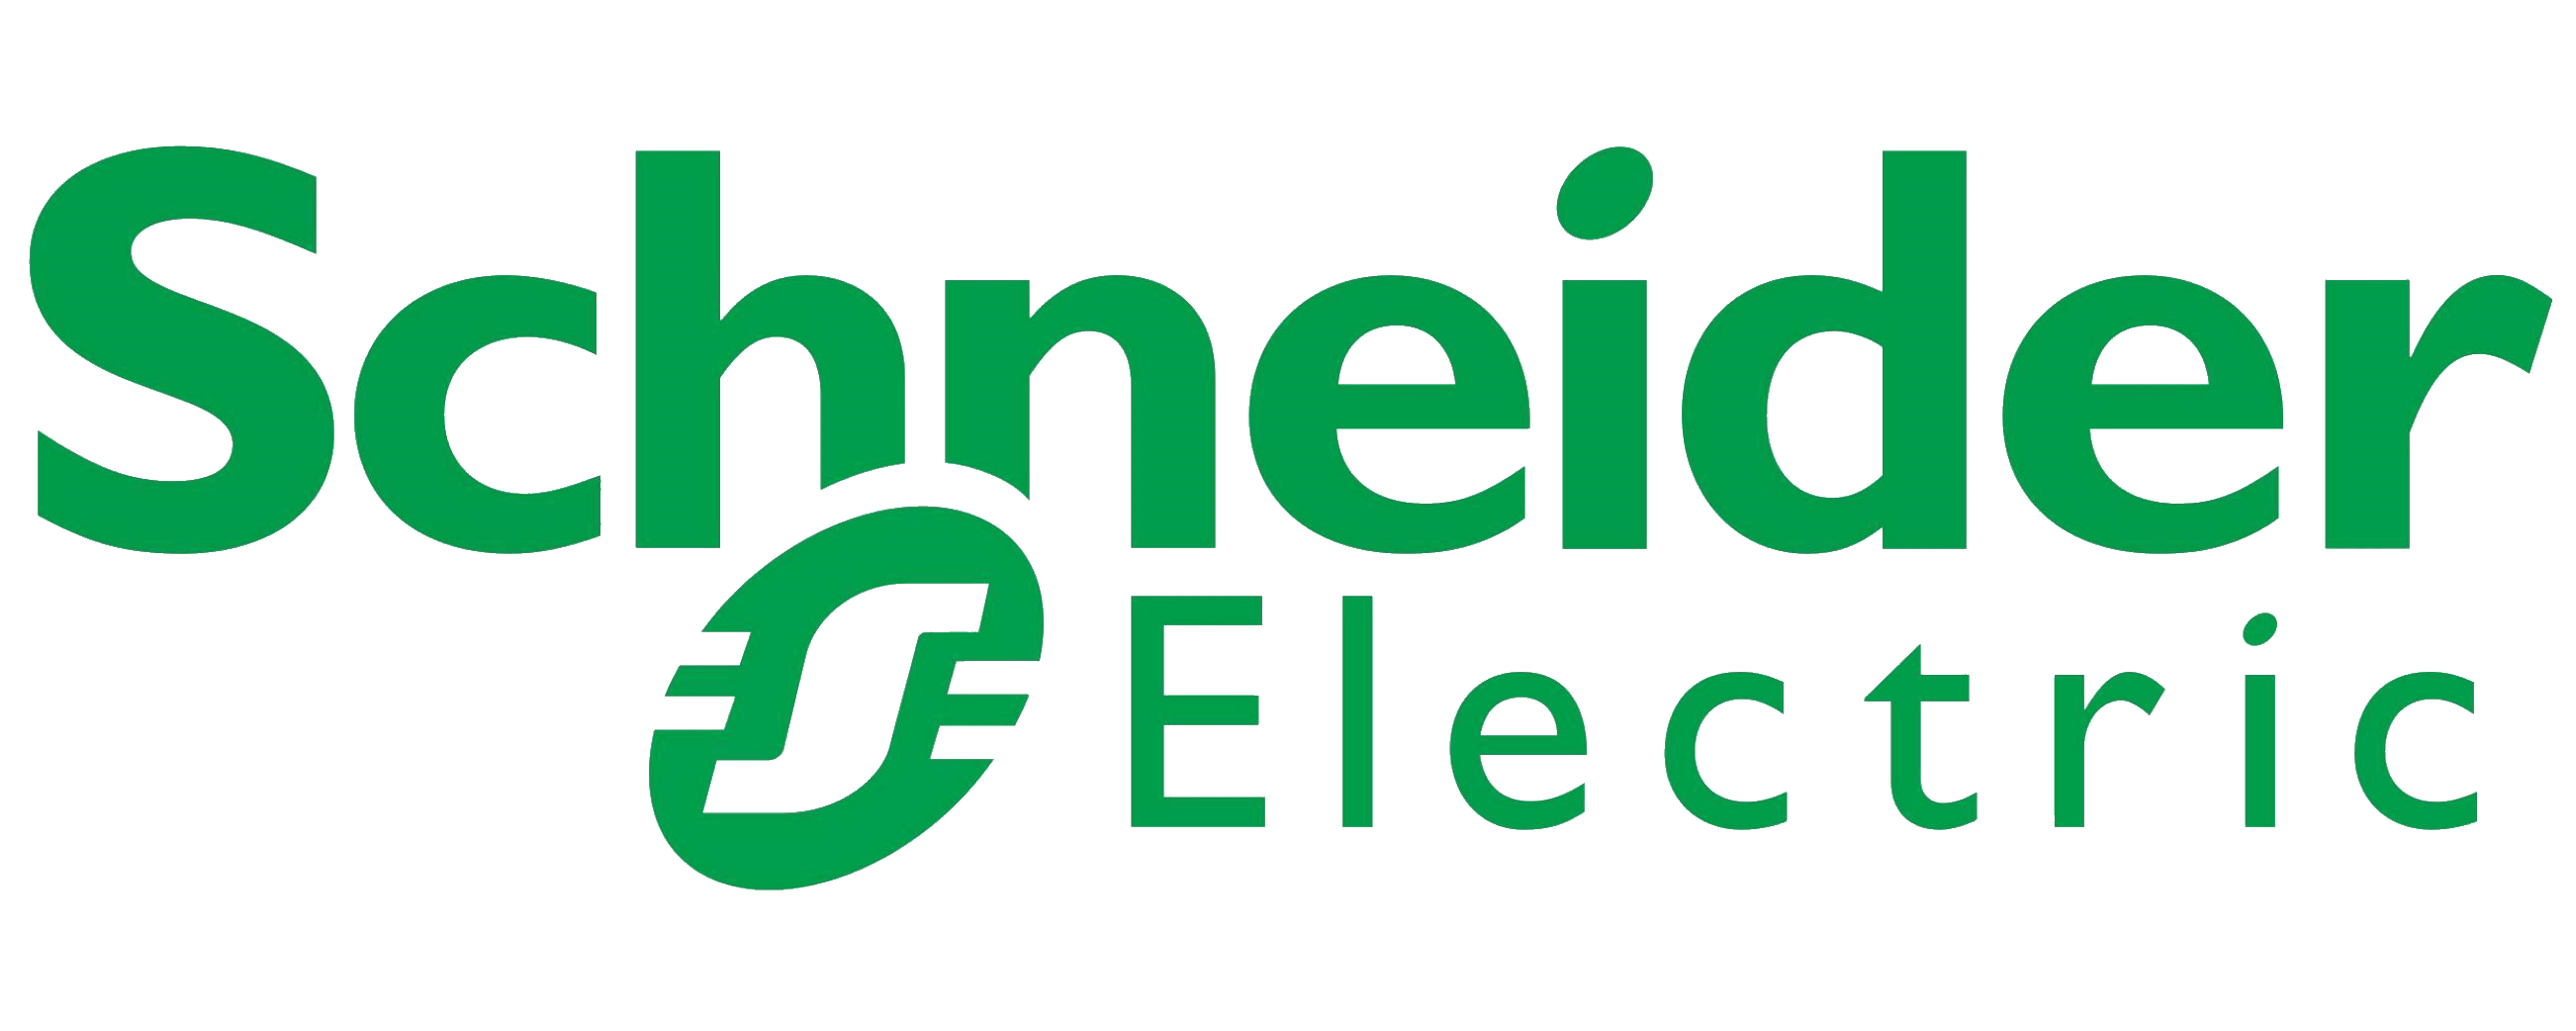 Schneider electric logo in green colour words